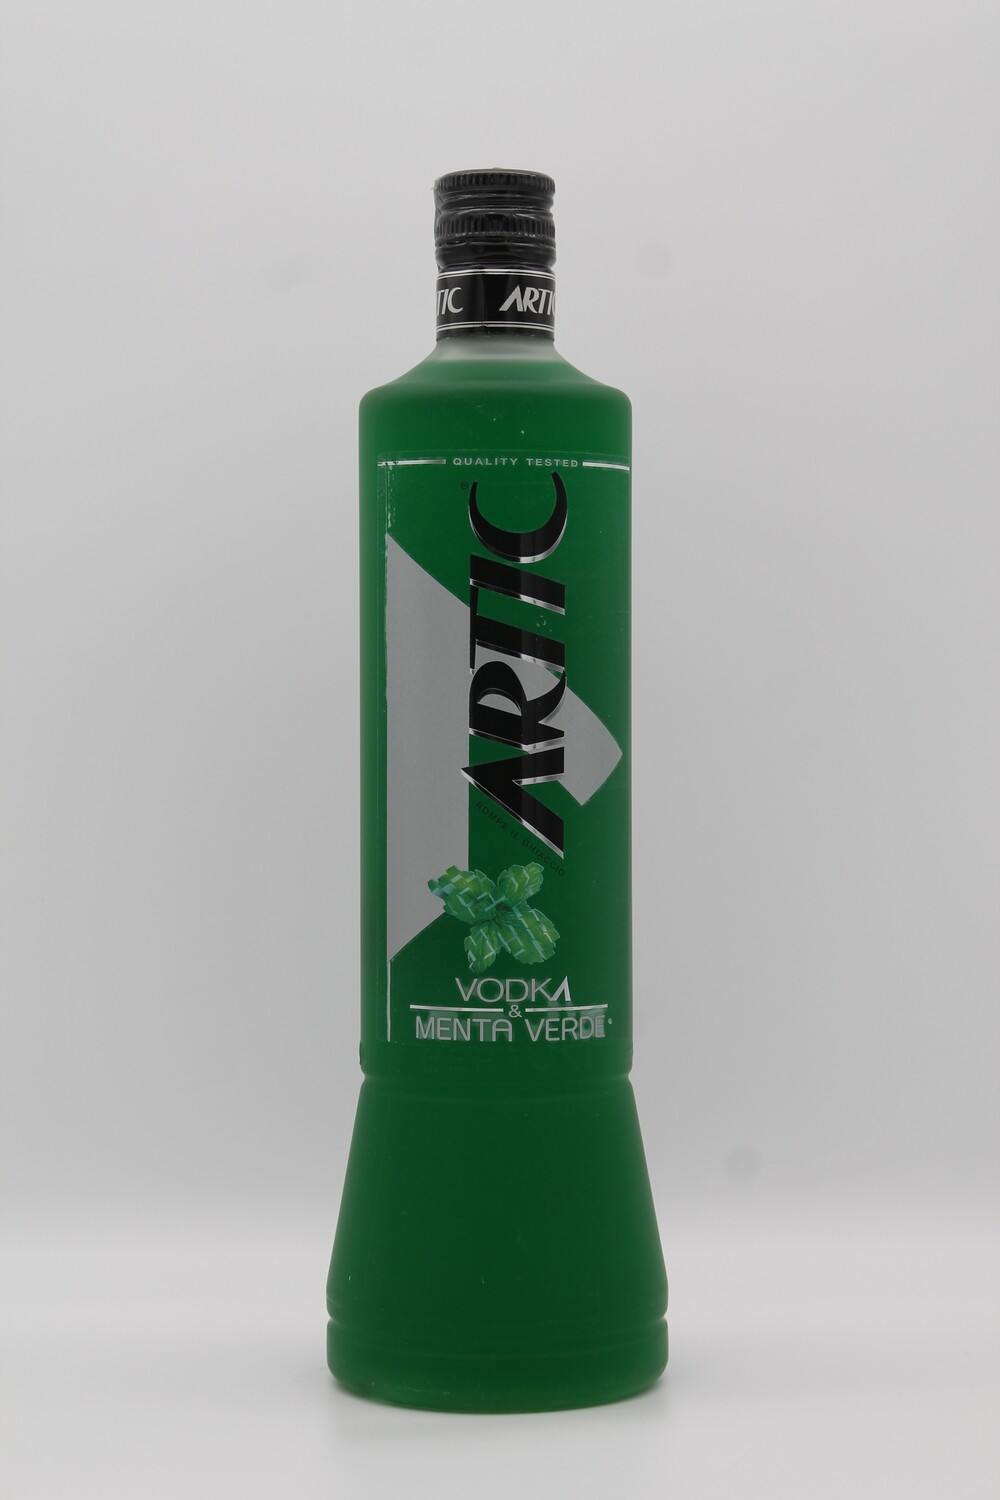 Vodka Artic menta verde 100cl